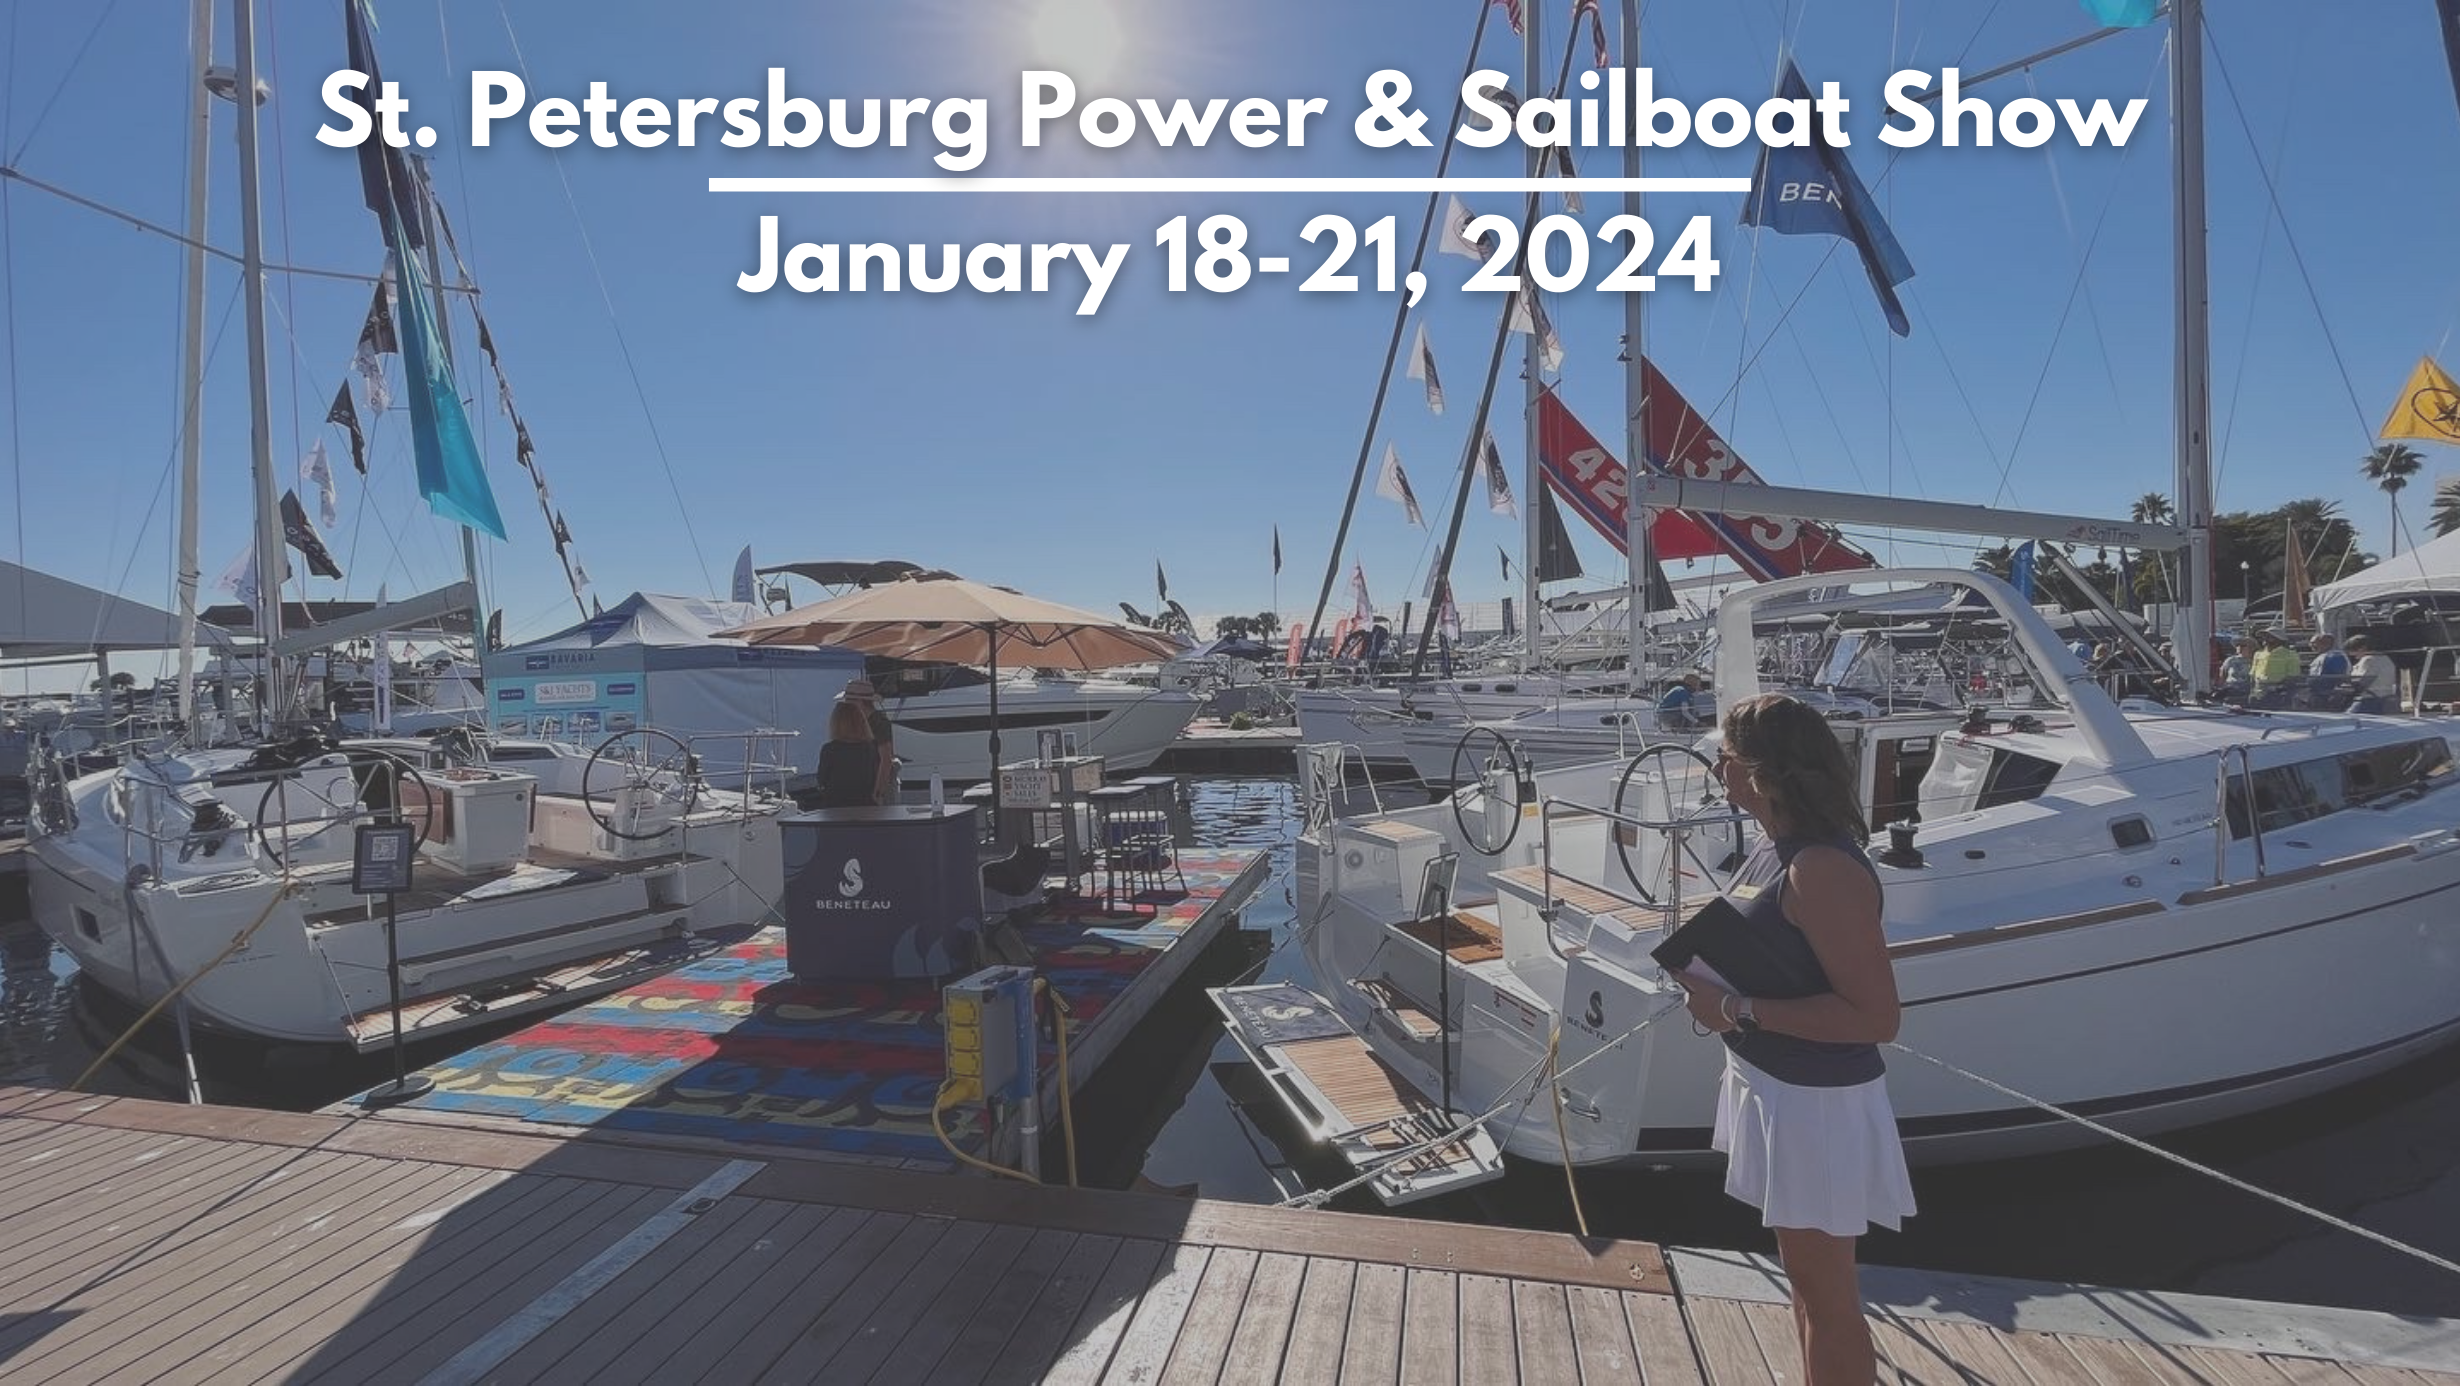 St Petersburg Sailboat Show, Schedule, Saint Petersburg Power, & sailboat